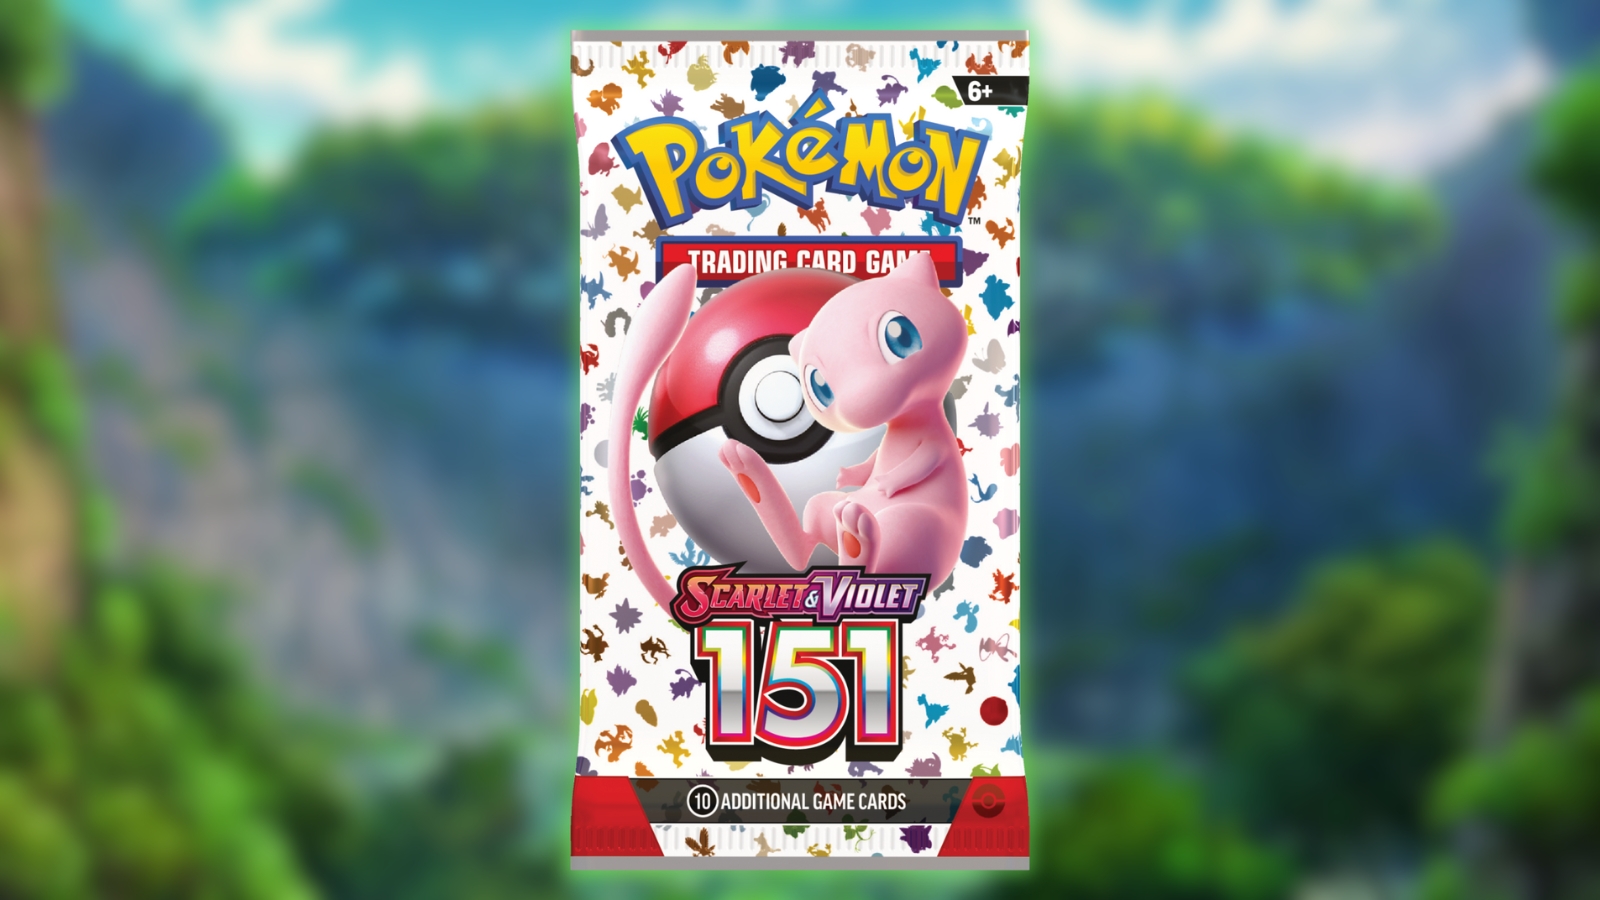 Booster Box Pokémon 151 Pokémon Card Game, Authentic Japanese Pokémon TCG  products